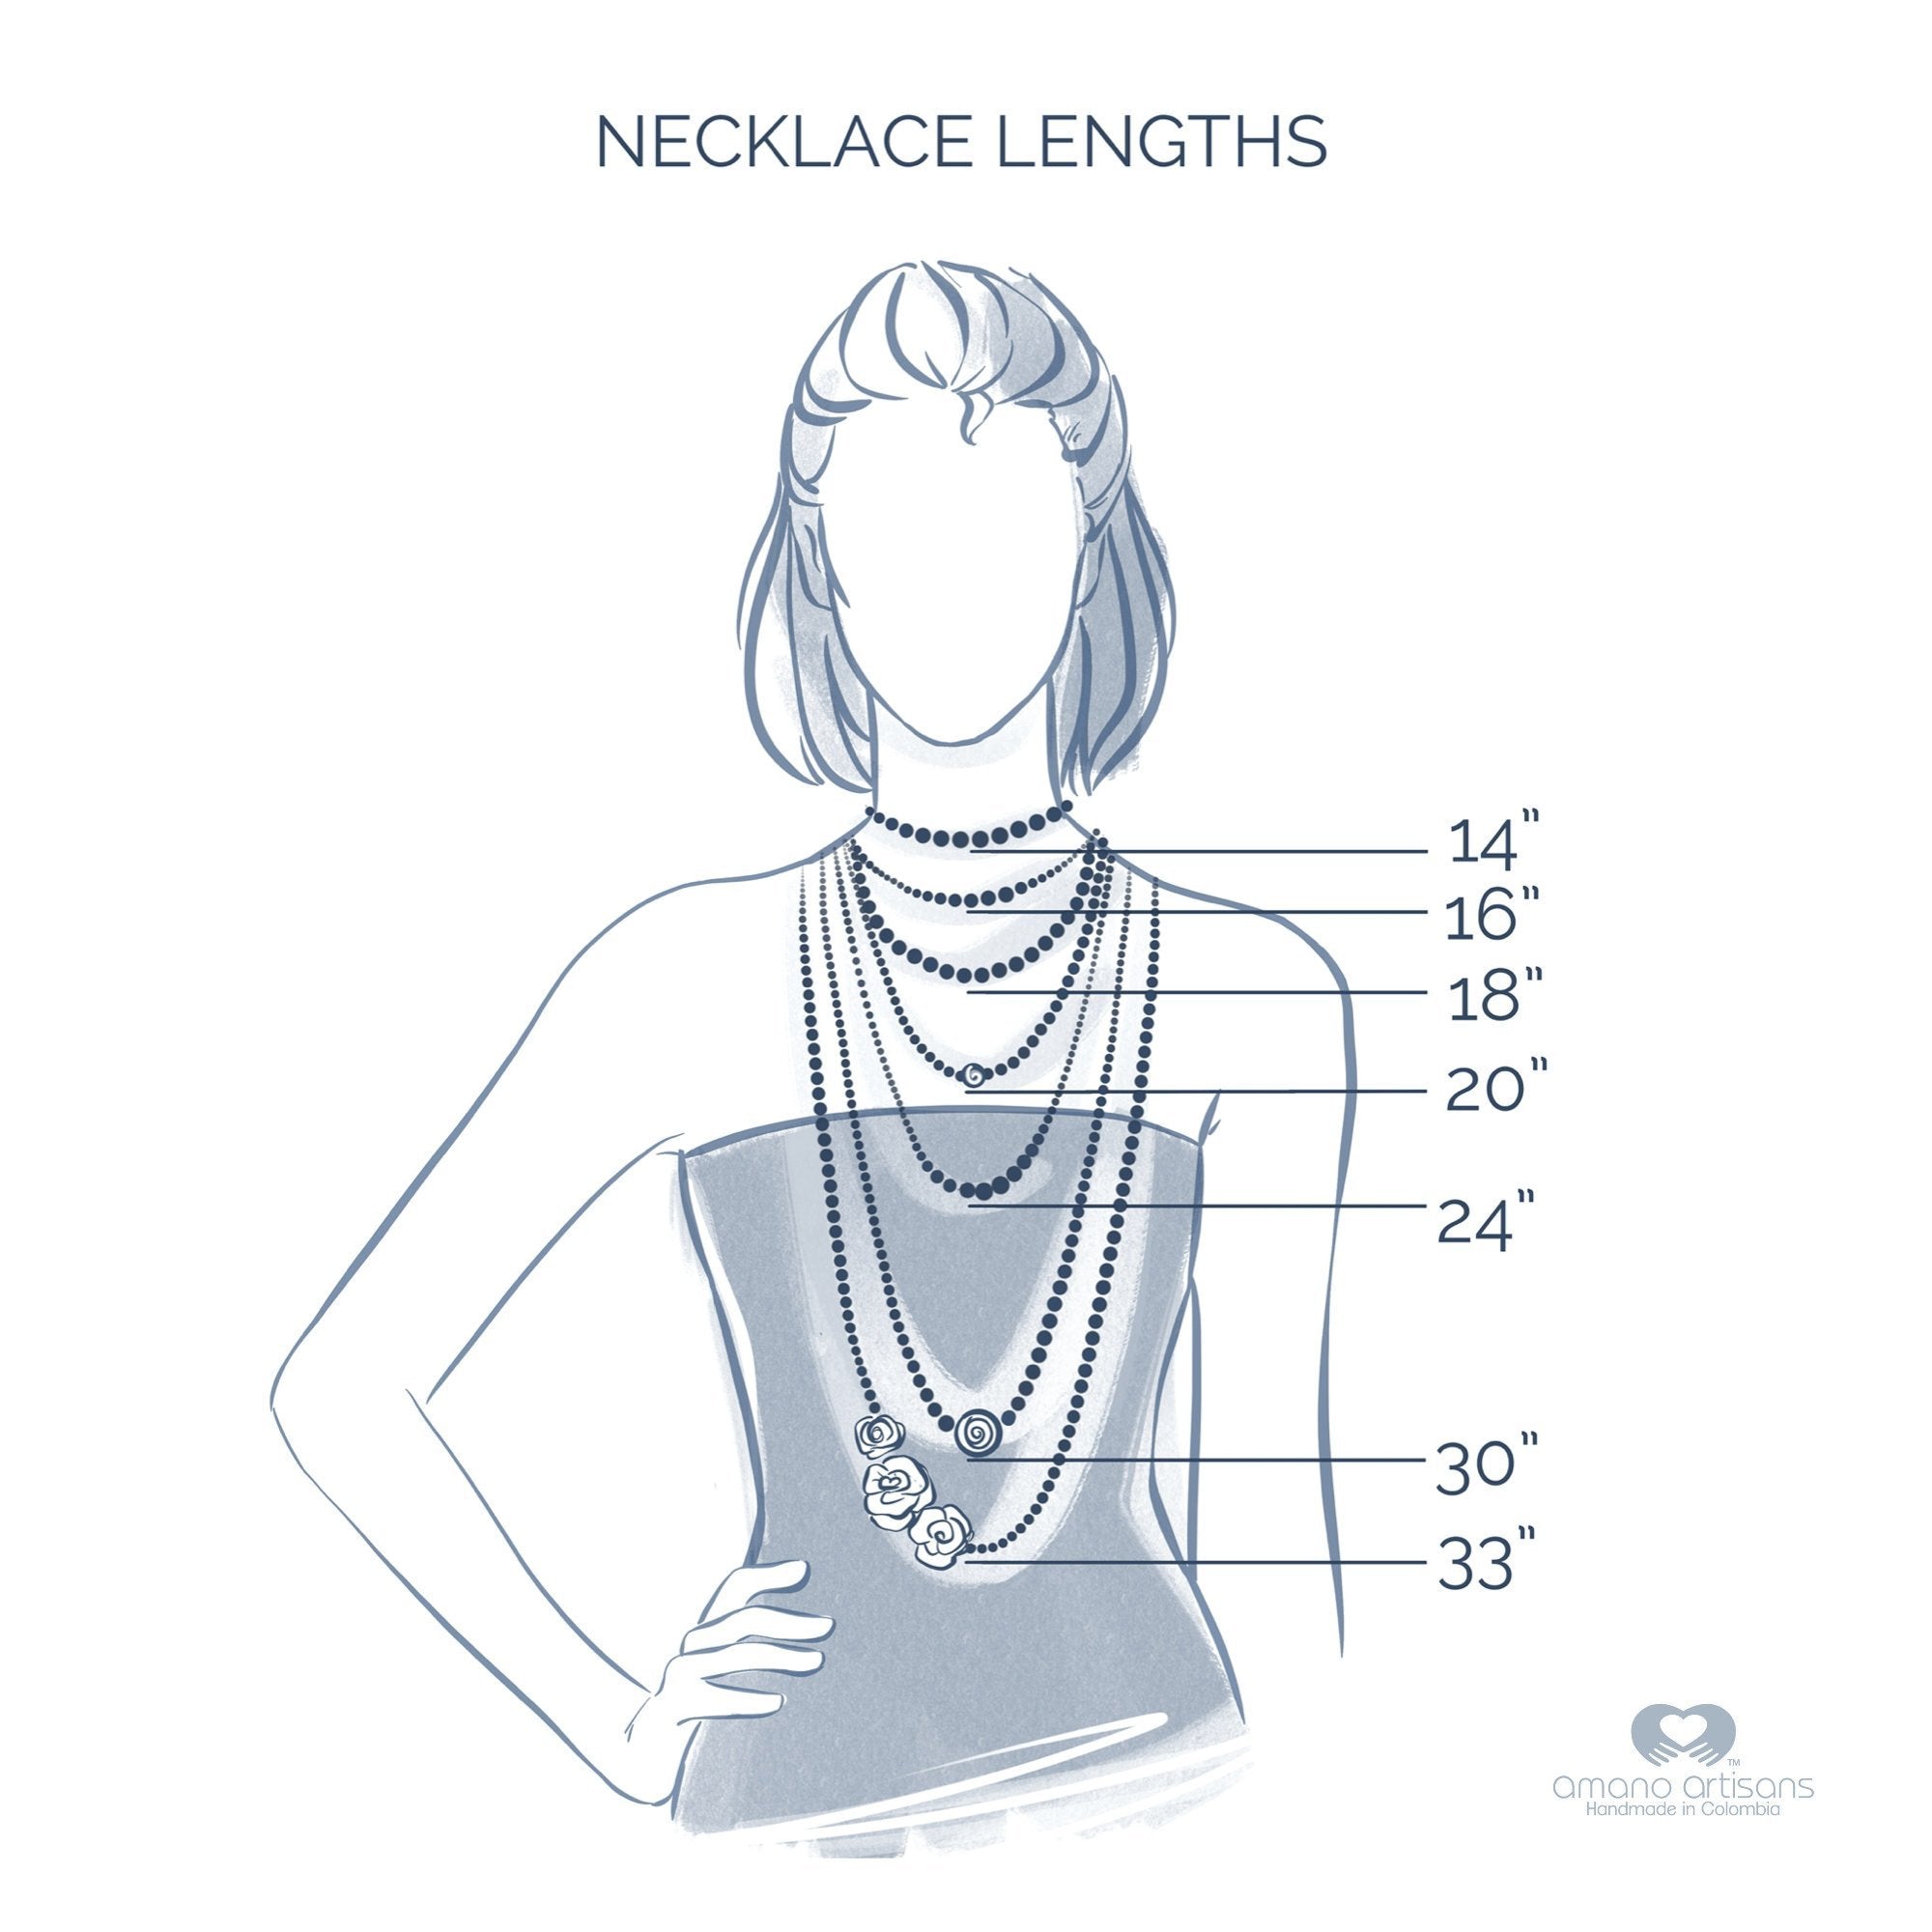  Necklace Lengths Illustration 